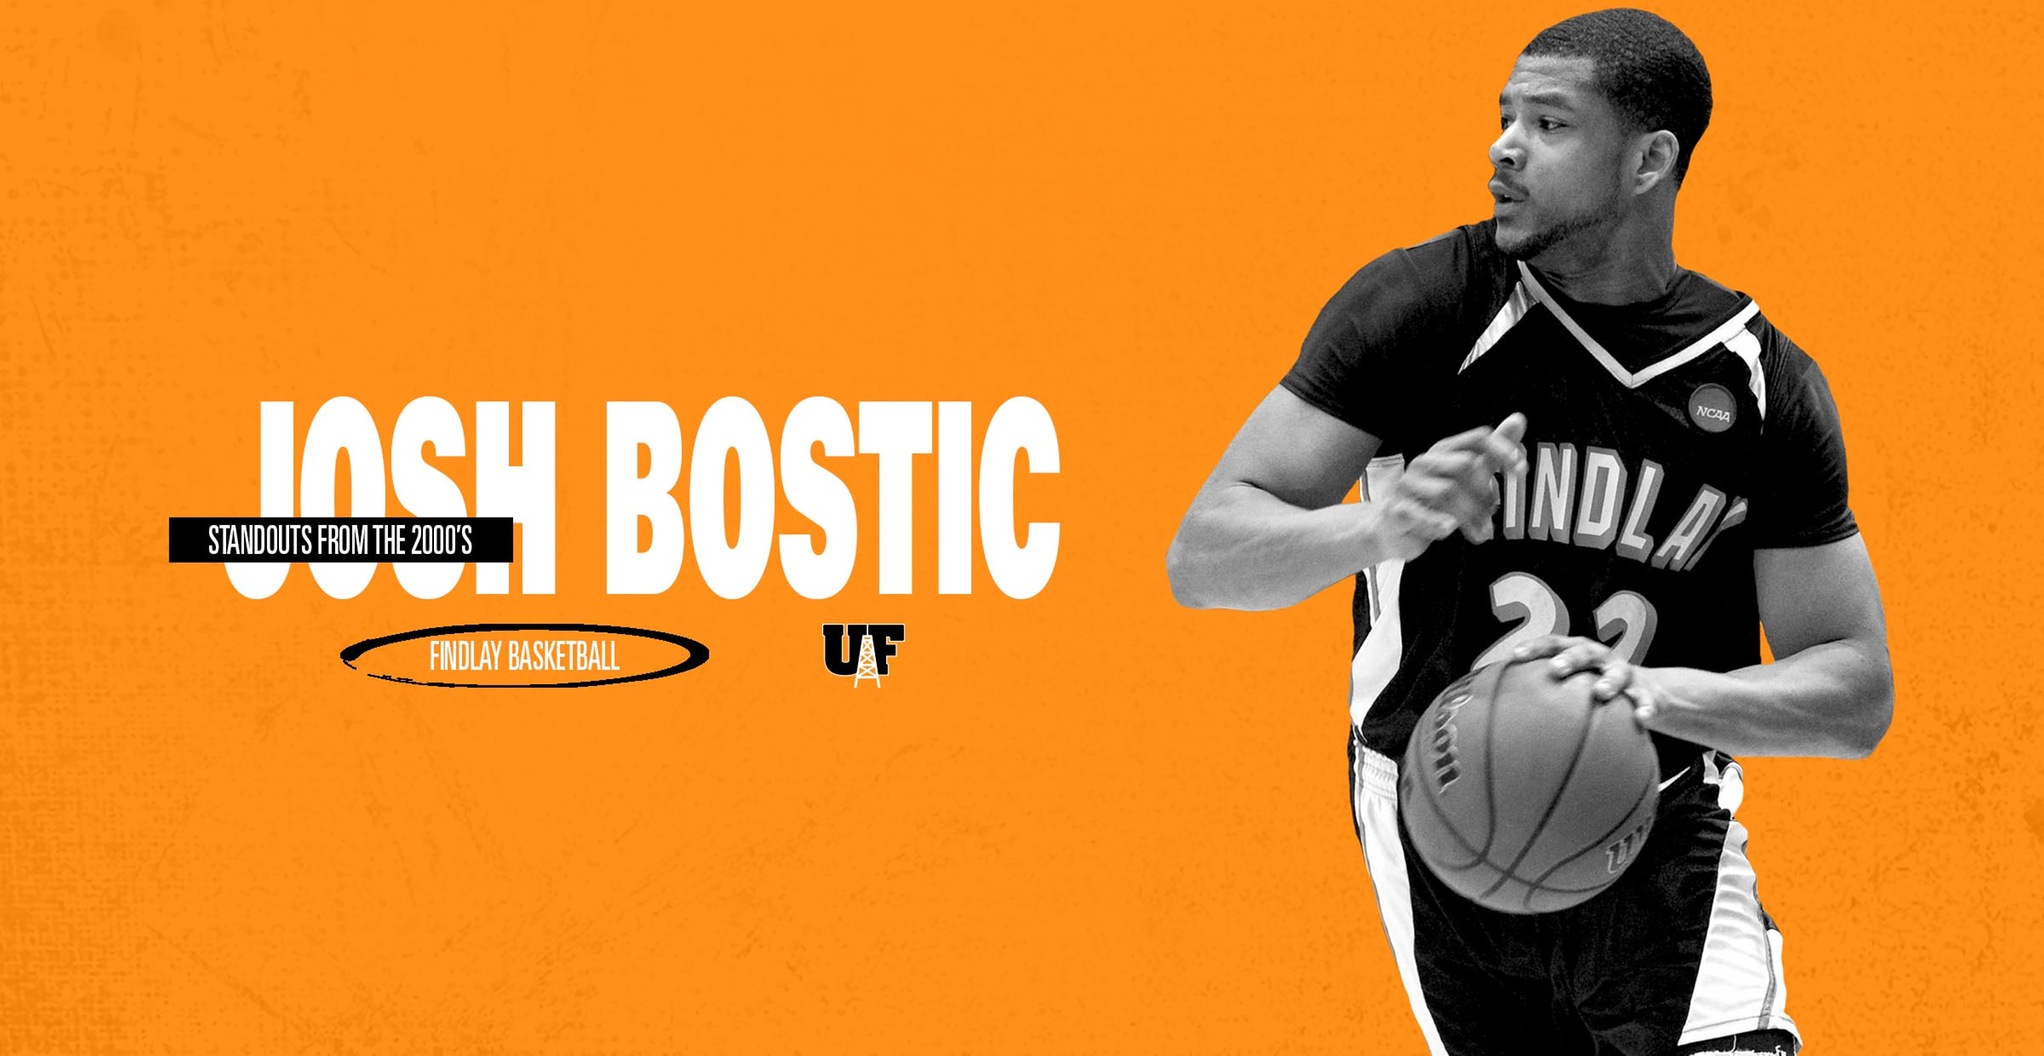 Josh Bostic, men's basketball player